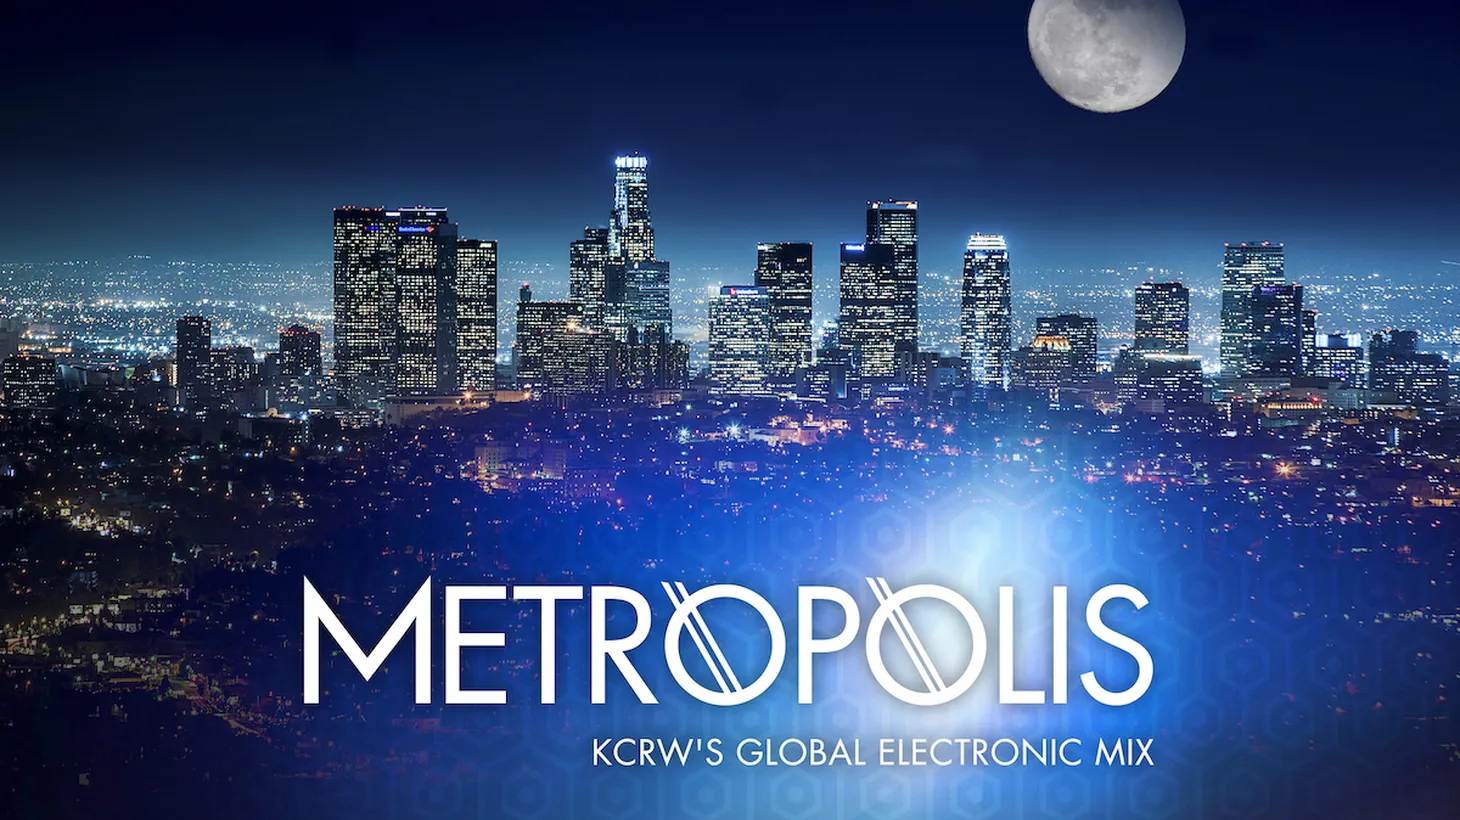 Metropolis playlist December 31, 2022.